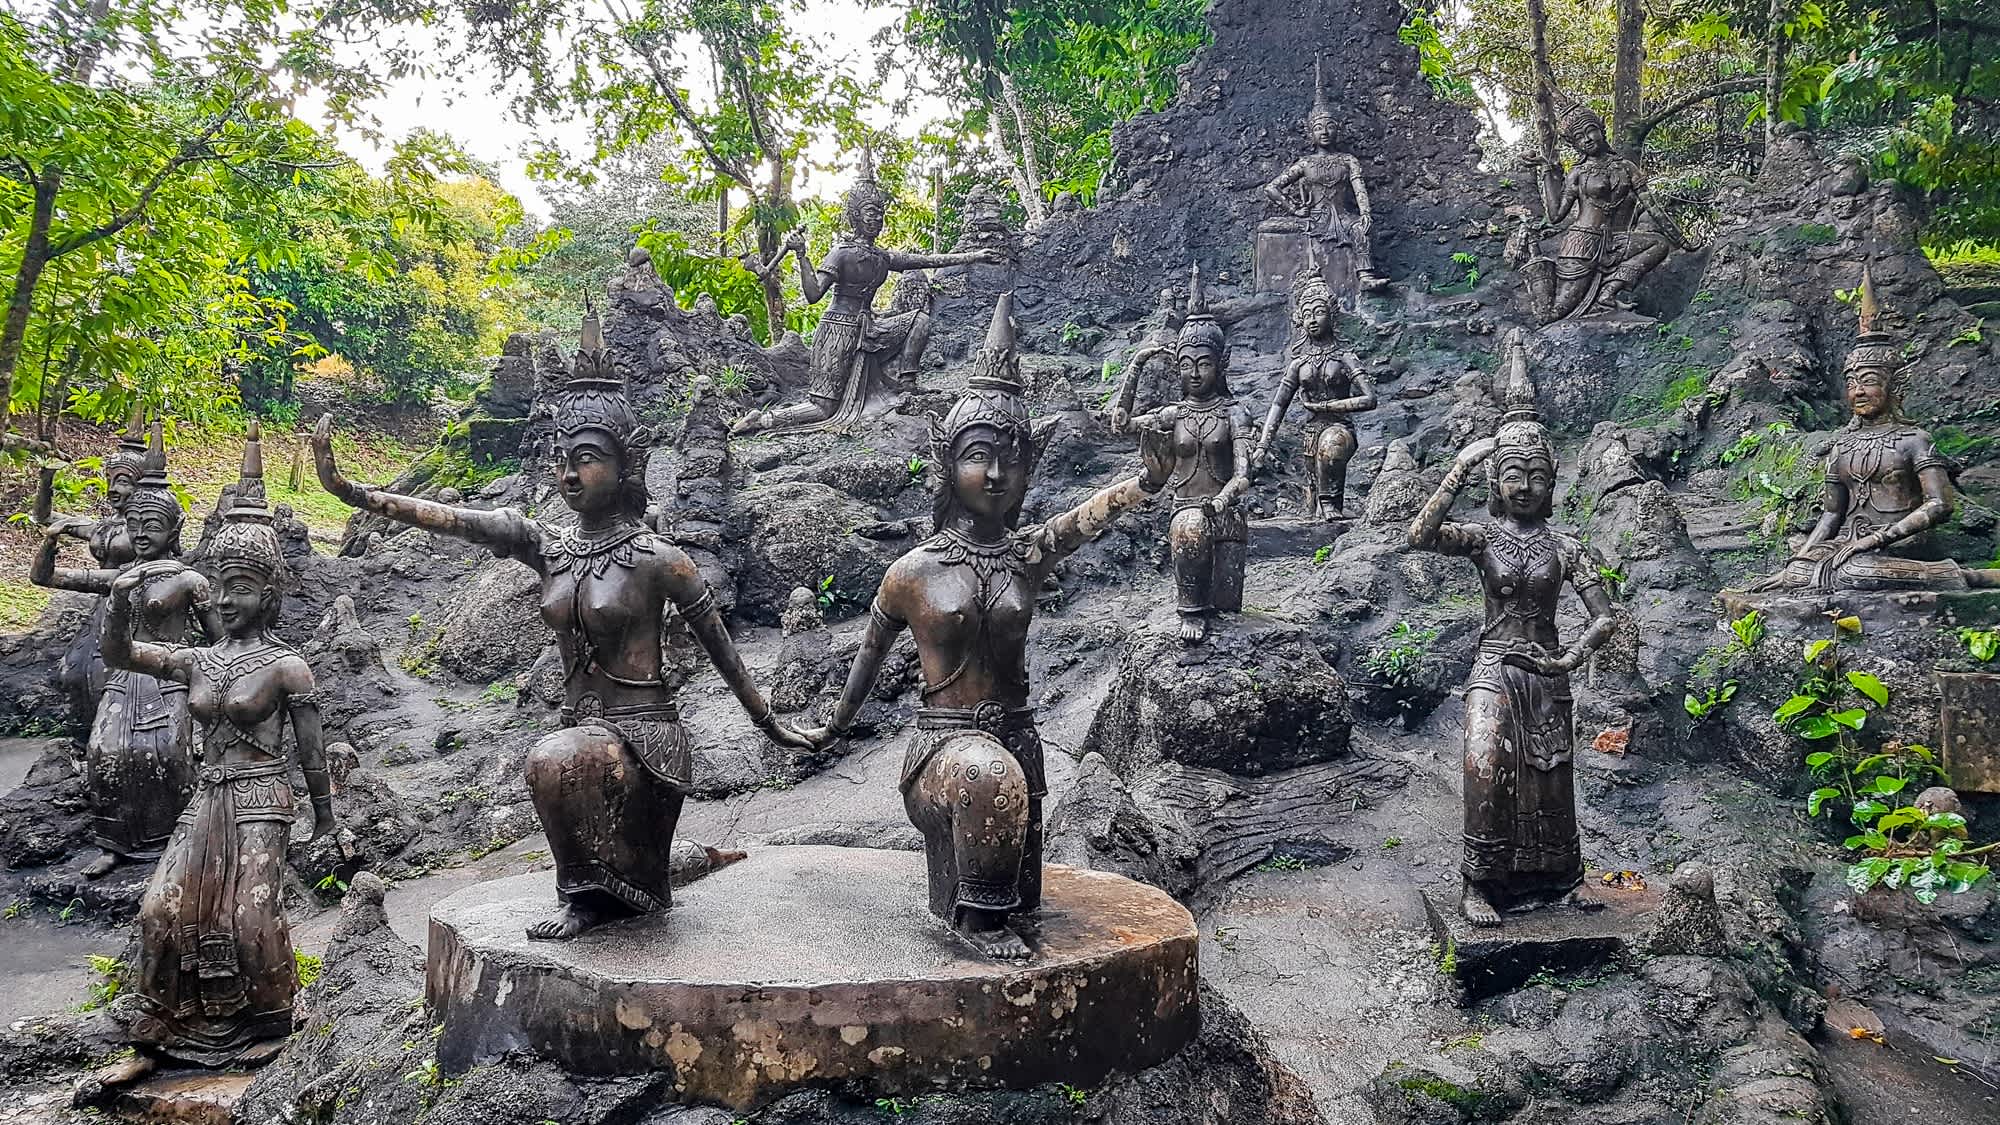 Statues de Bouddha dans le Magic Buddha Garden à Koh Samui, Surat Thani, Thaïlande.

